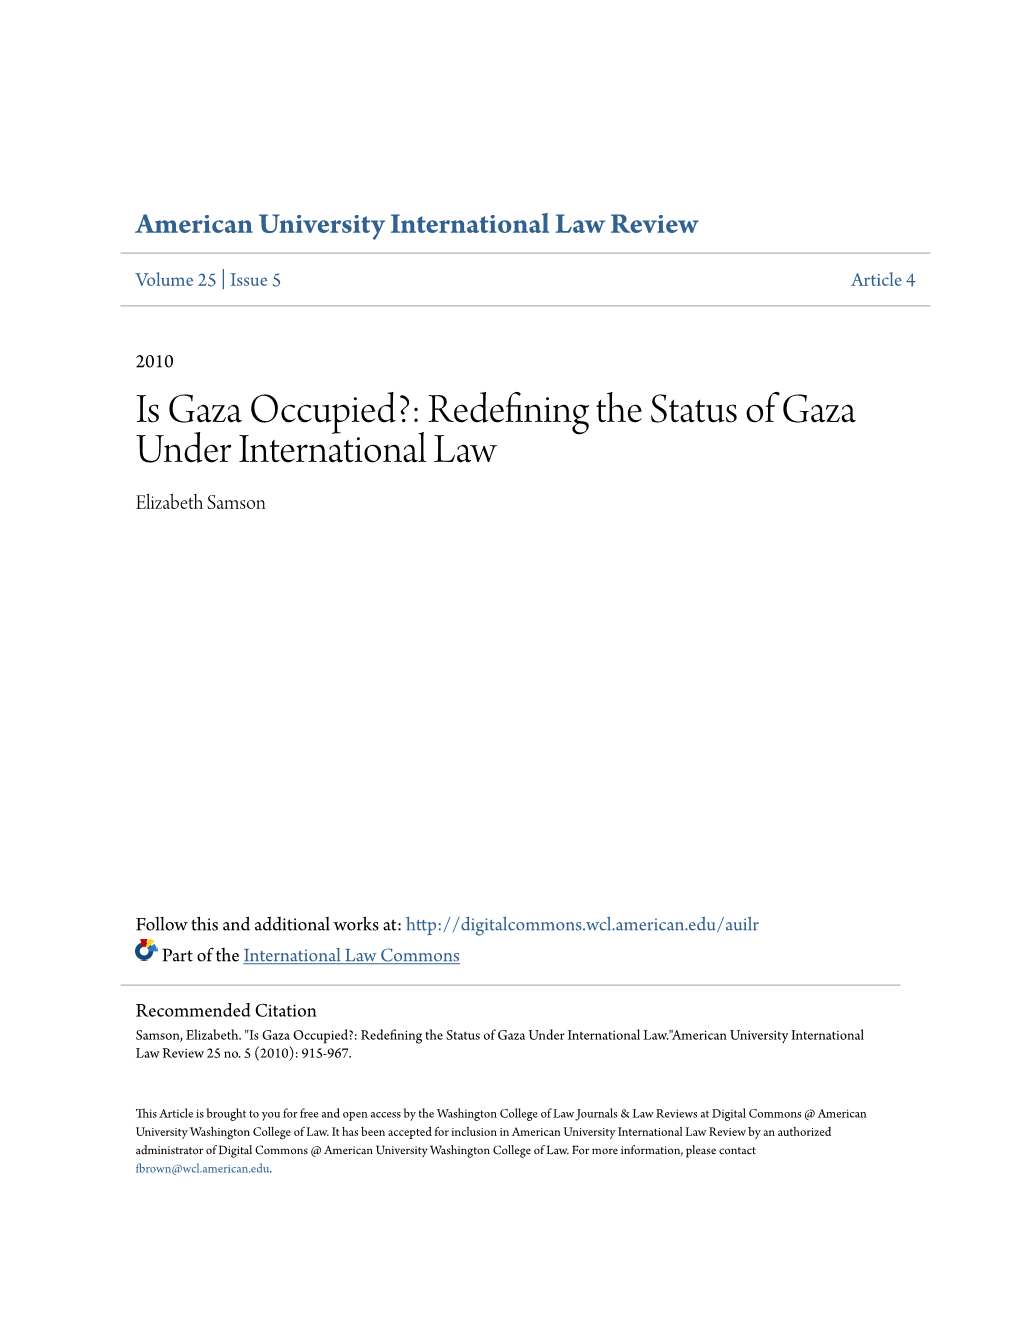 Is Gaza Occupied?: Redefining the Status of Gaza Under International Law Elizabeth Samson